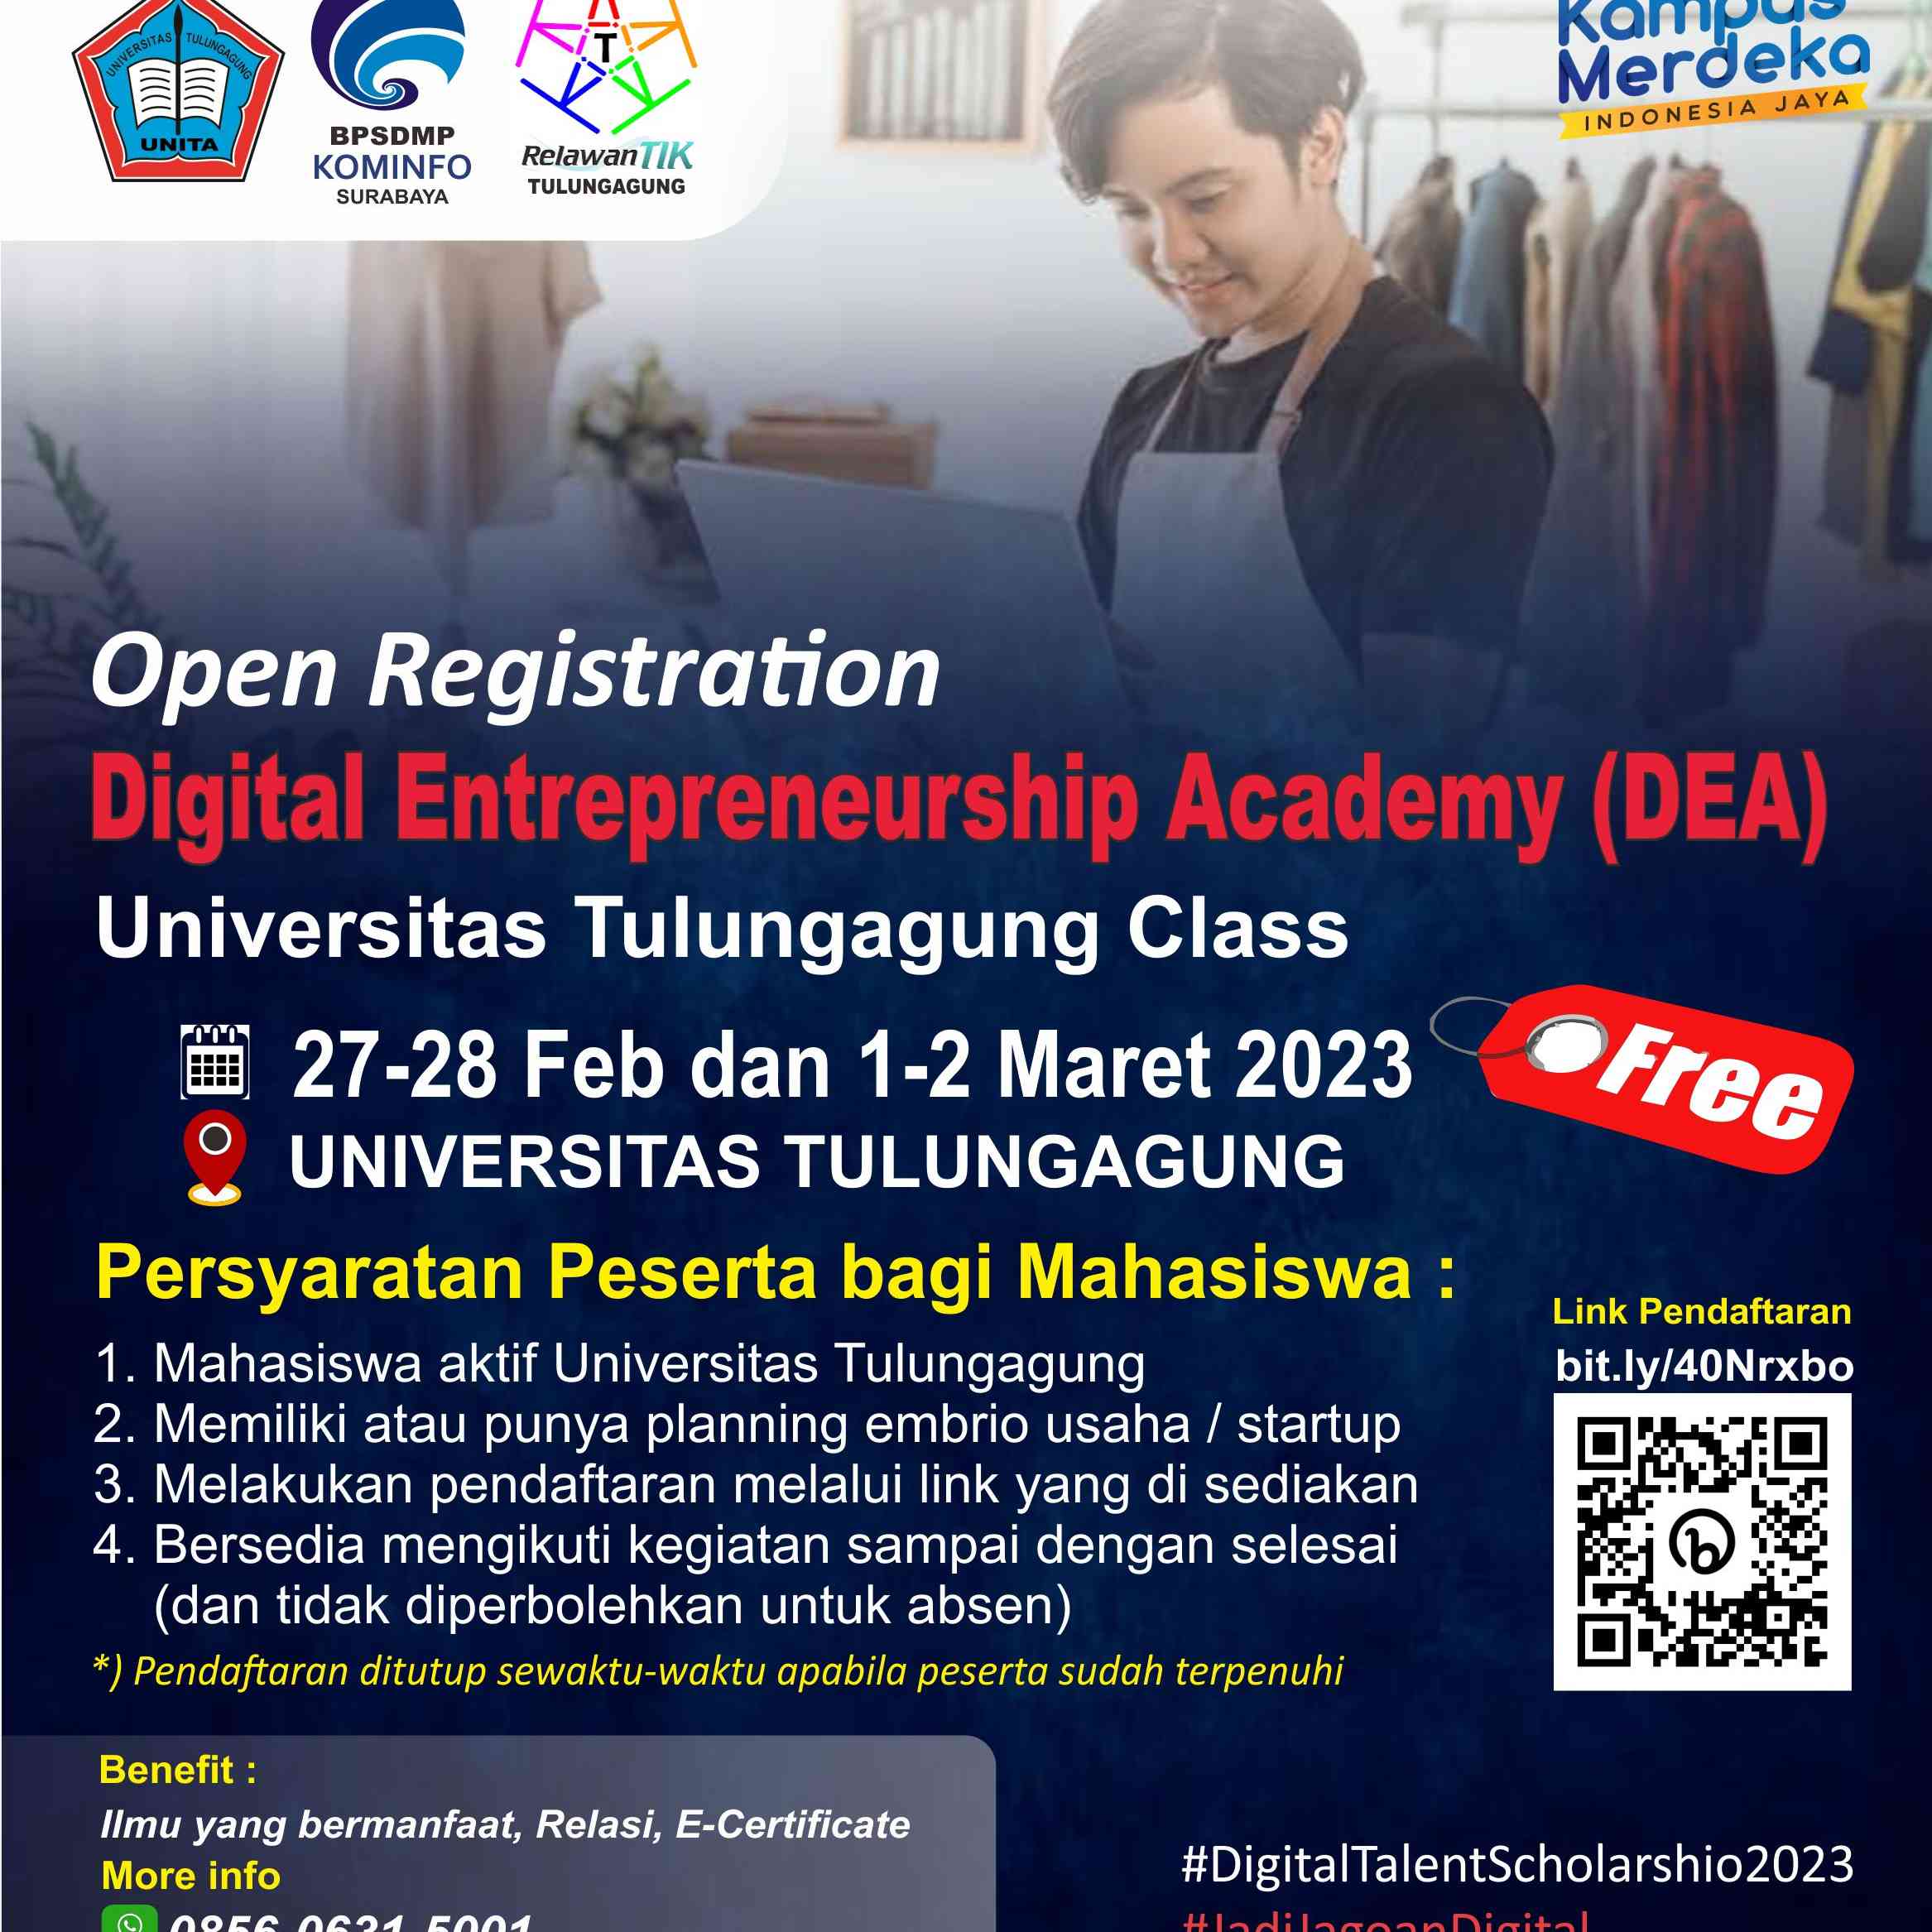 Digital Entrepreneurship Academy (DEA) Kominfo bekerjasama dengan Universitas Tulungagung